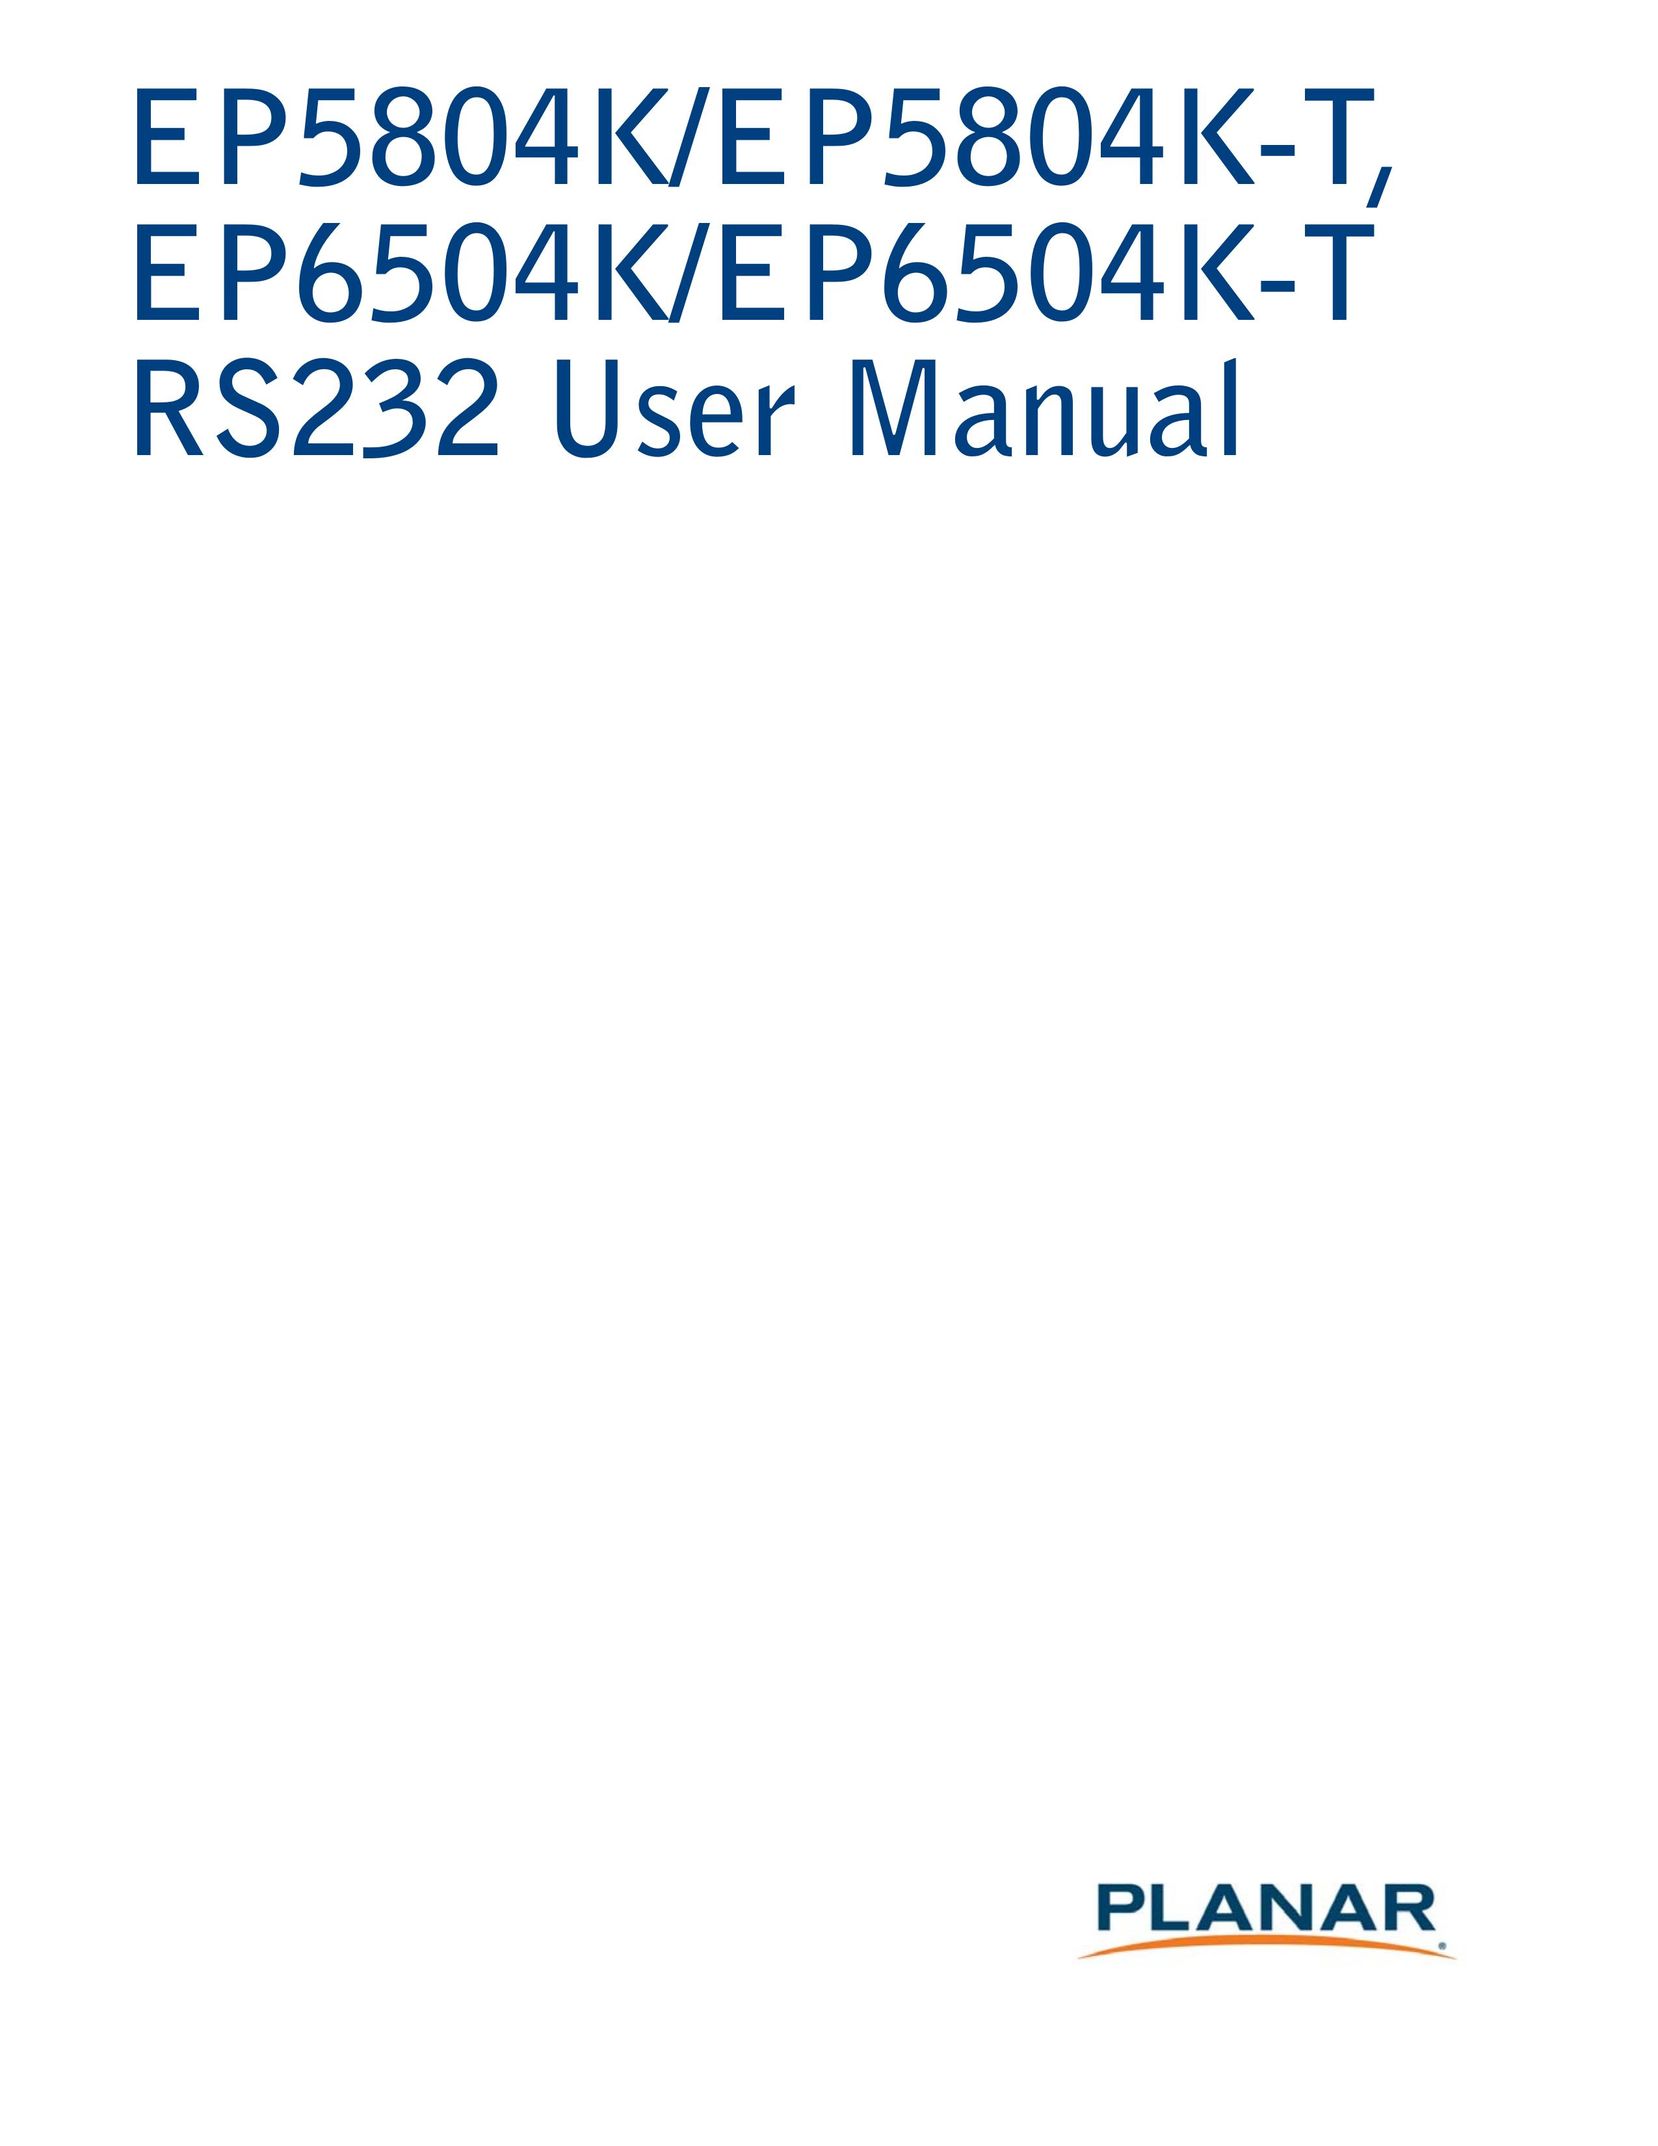 Planar EP6504K/EP6504K-T Car Video System User Manual